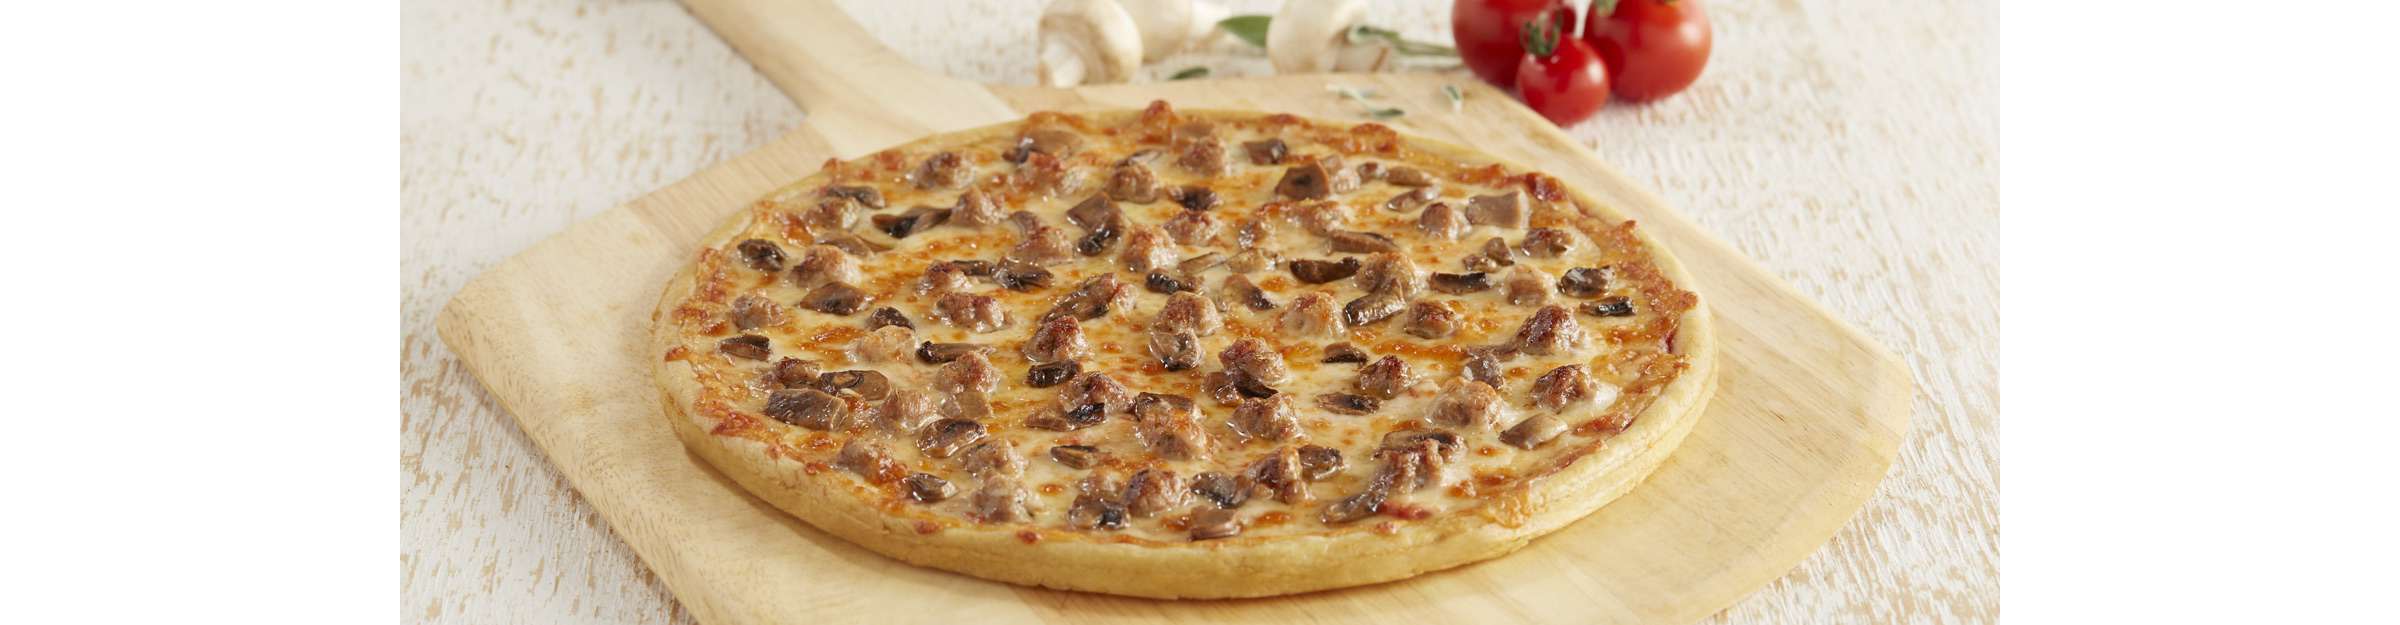 suasage & mushroom pizza that Safety Manager Luke Likes